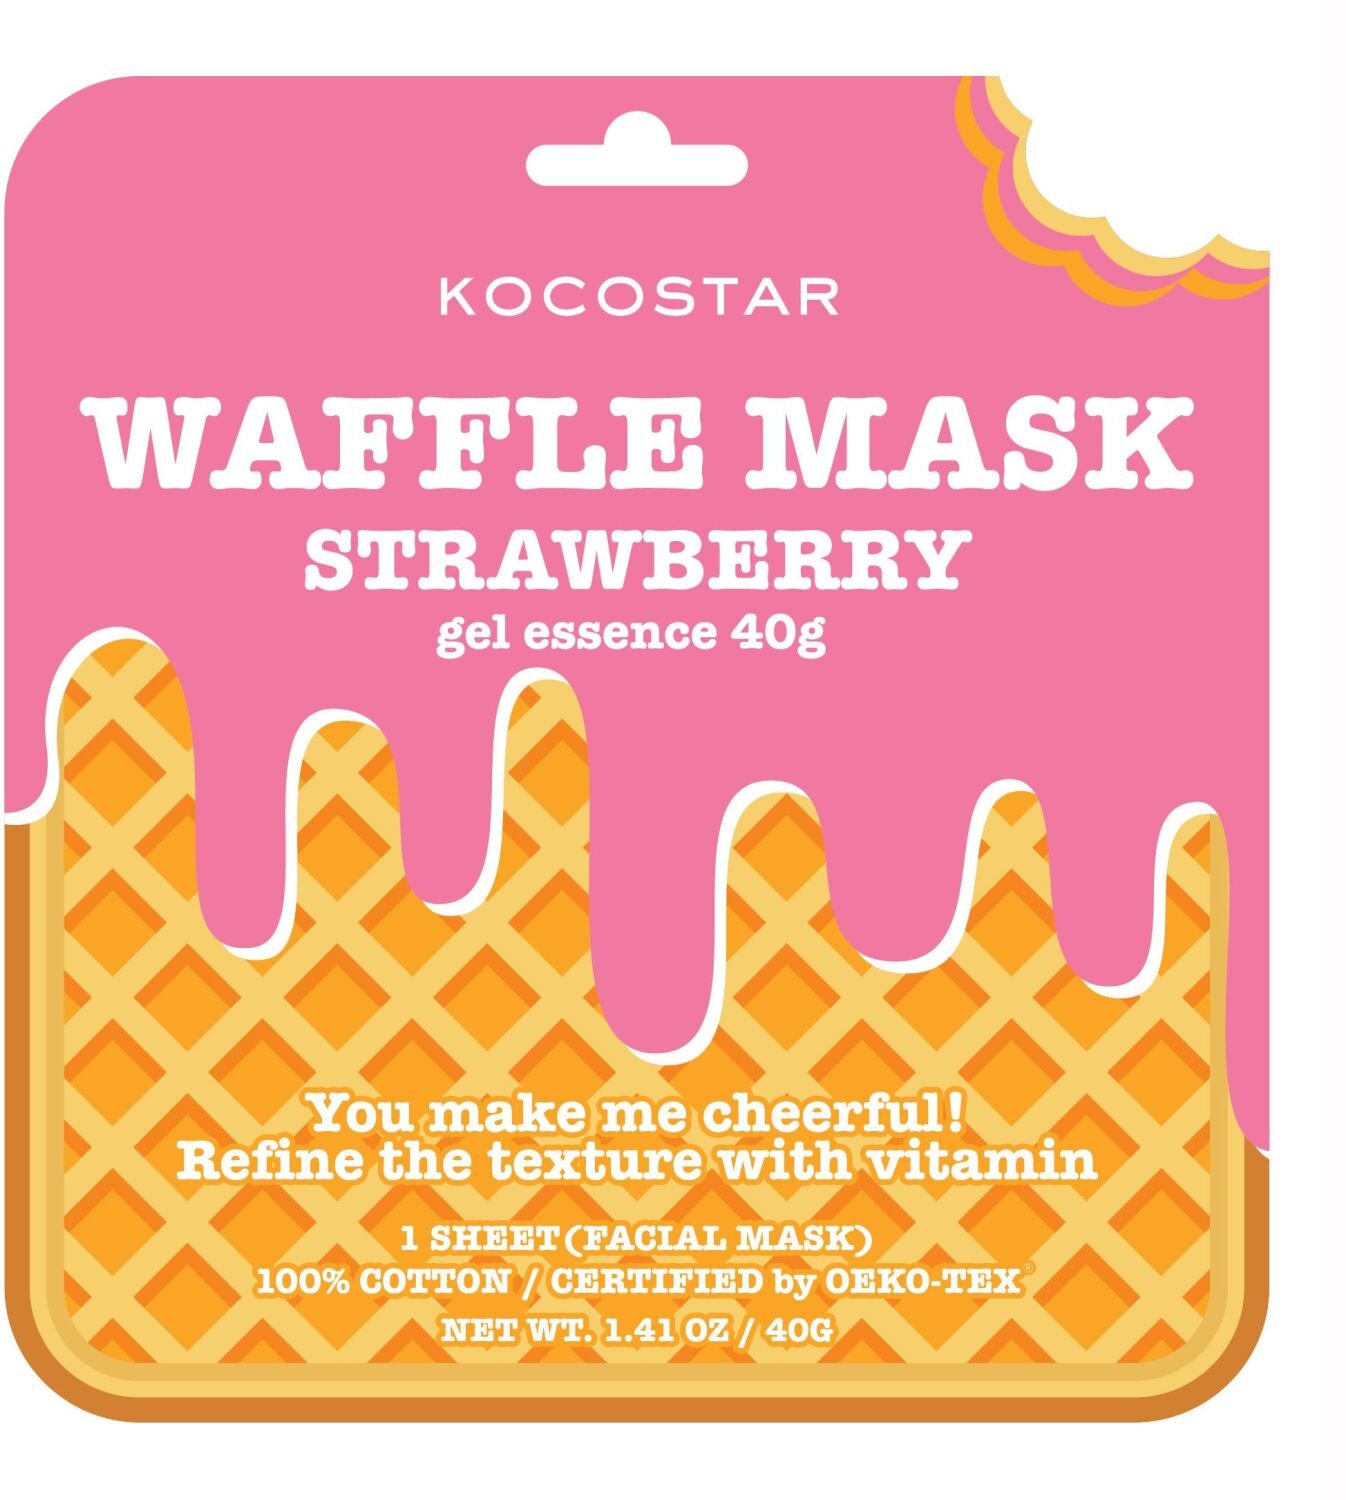 Kocostar Waffle Mask Strawberry 40 g / 1 sheet